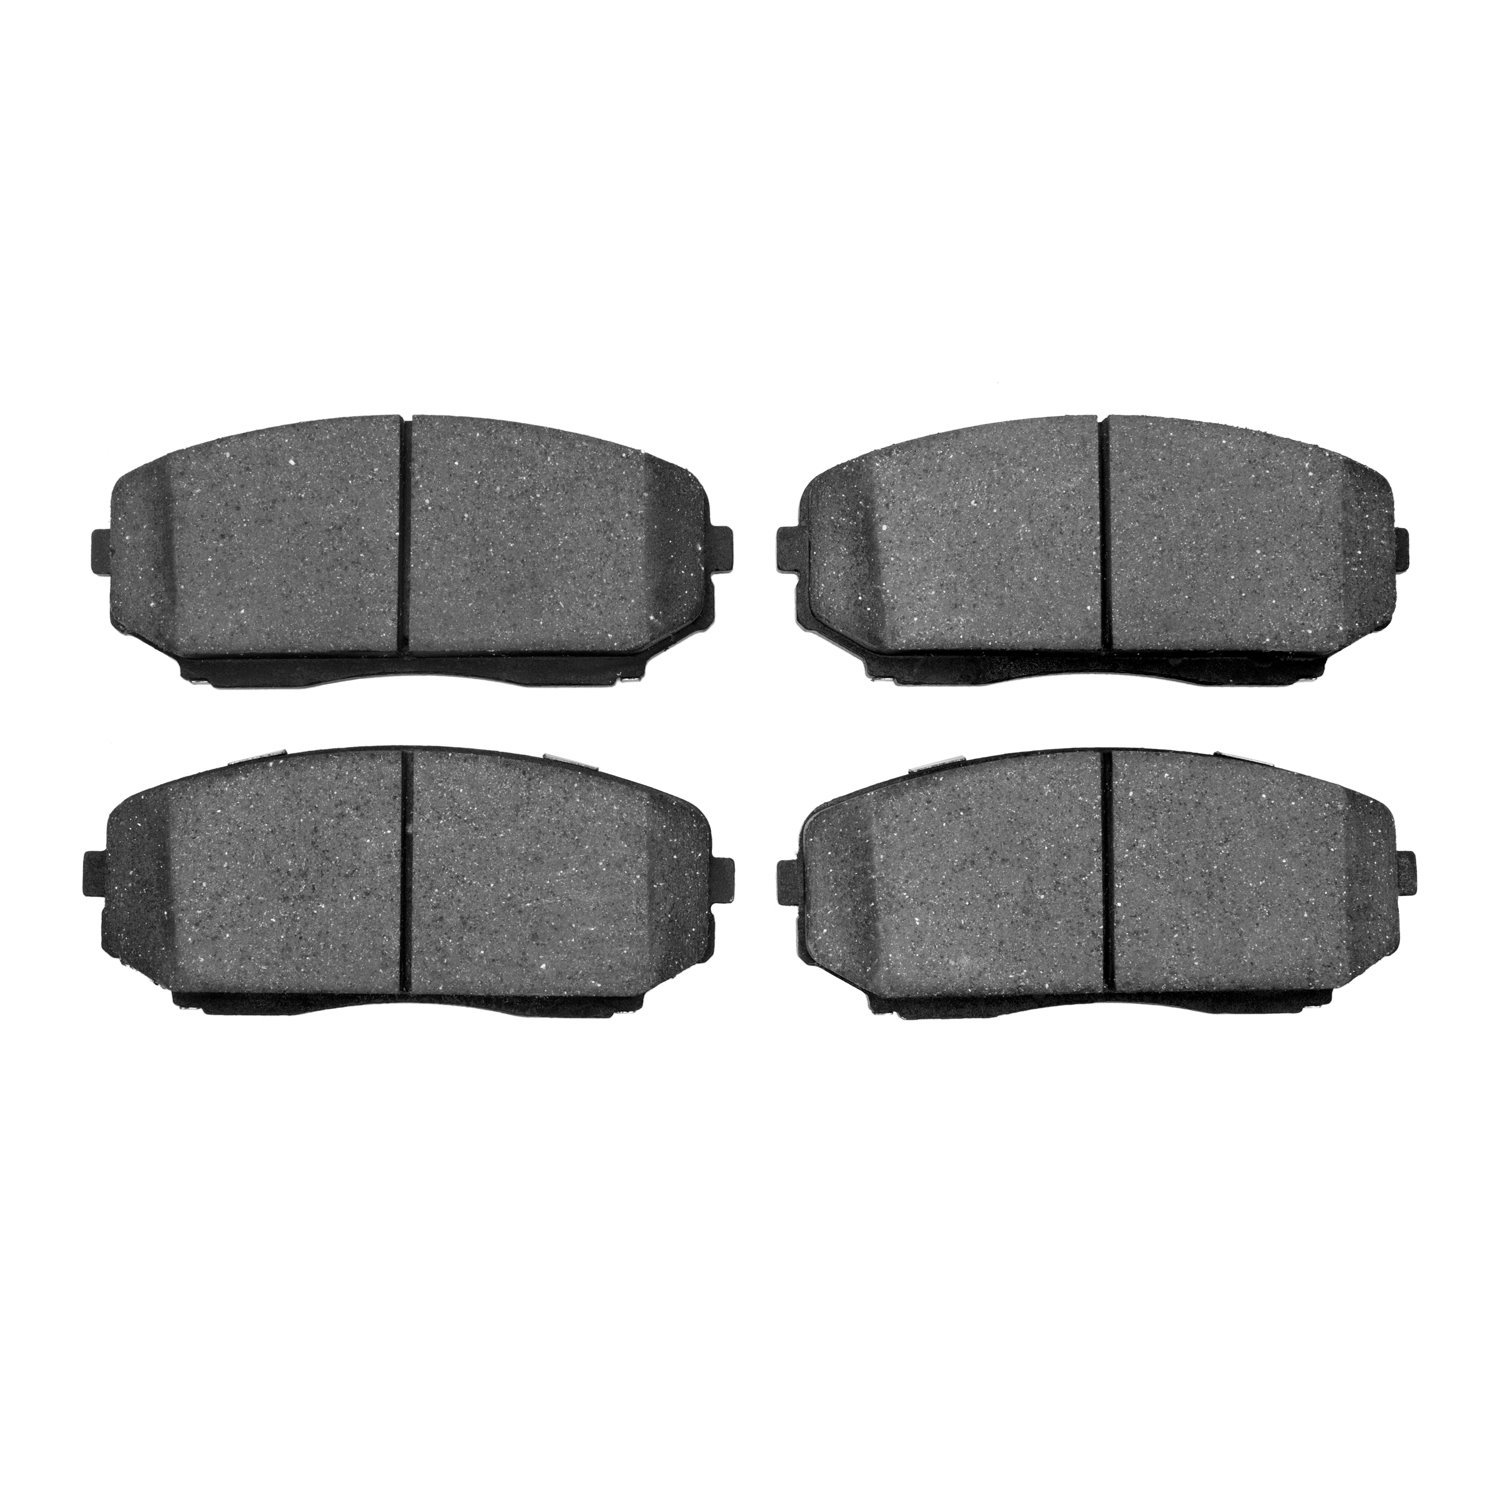 Ceramic Brake Pads, Fits Select Fits Multiple Makes/Models, Position: Front